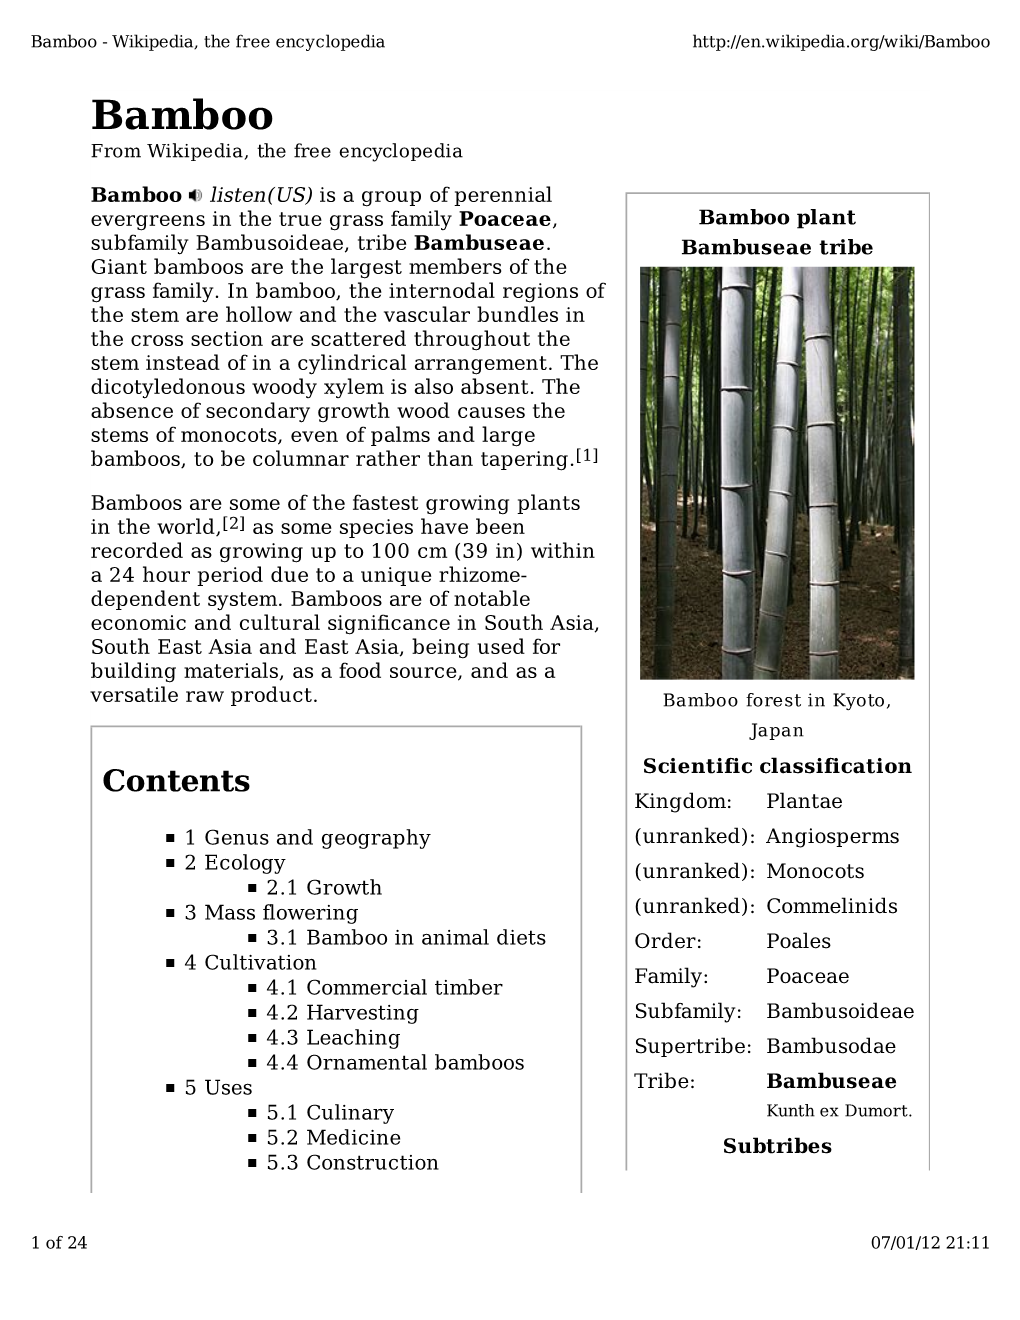 Bamboo - Wikipedia, the Free Encyclopedia